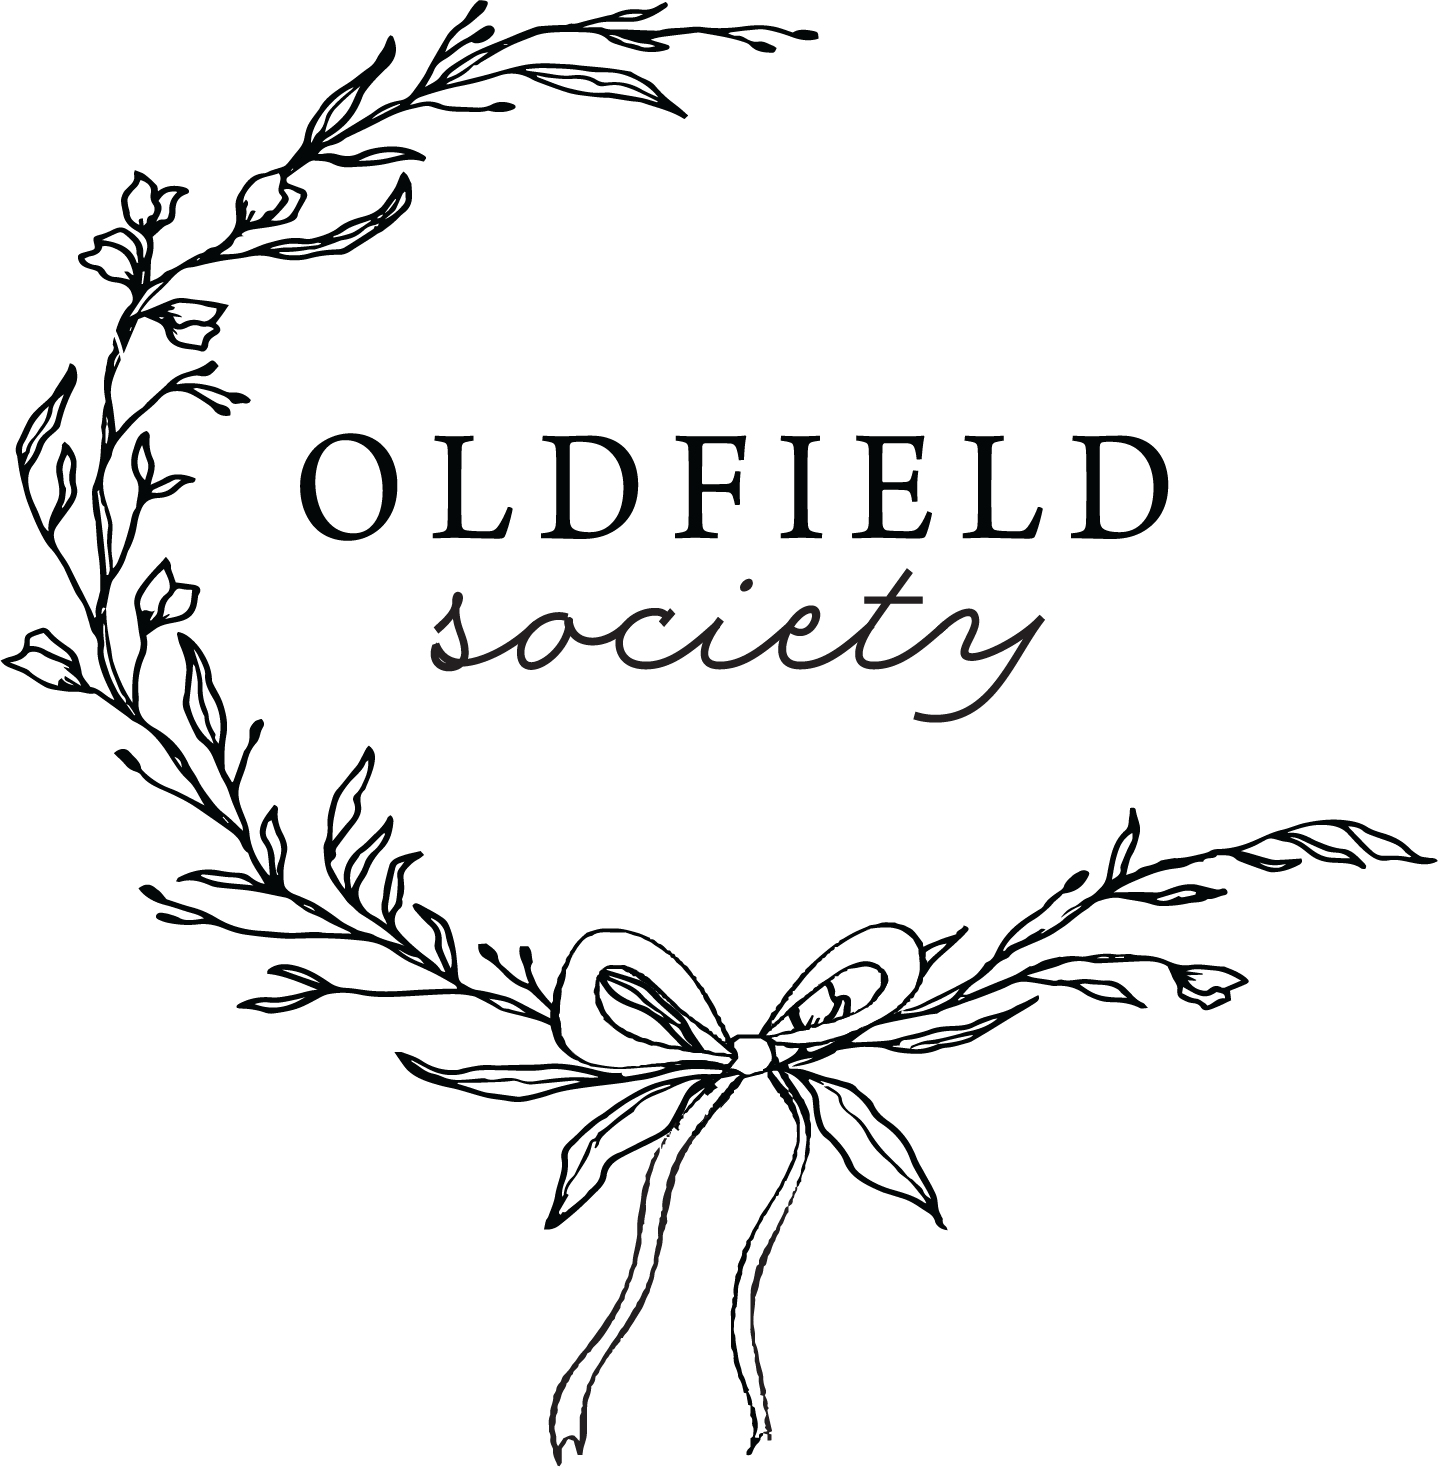 Oldfield Society